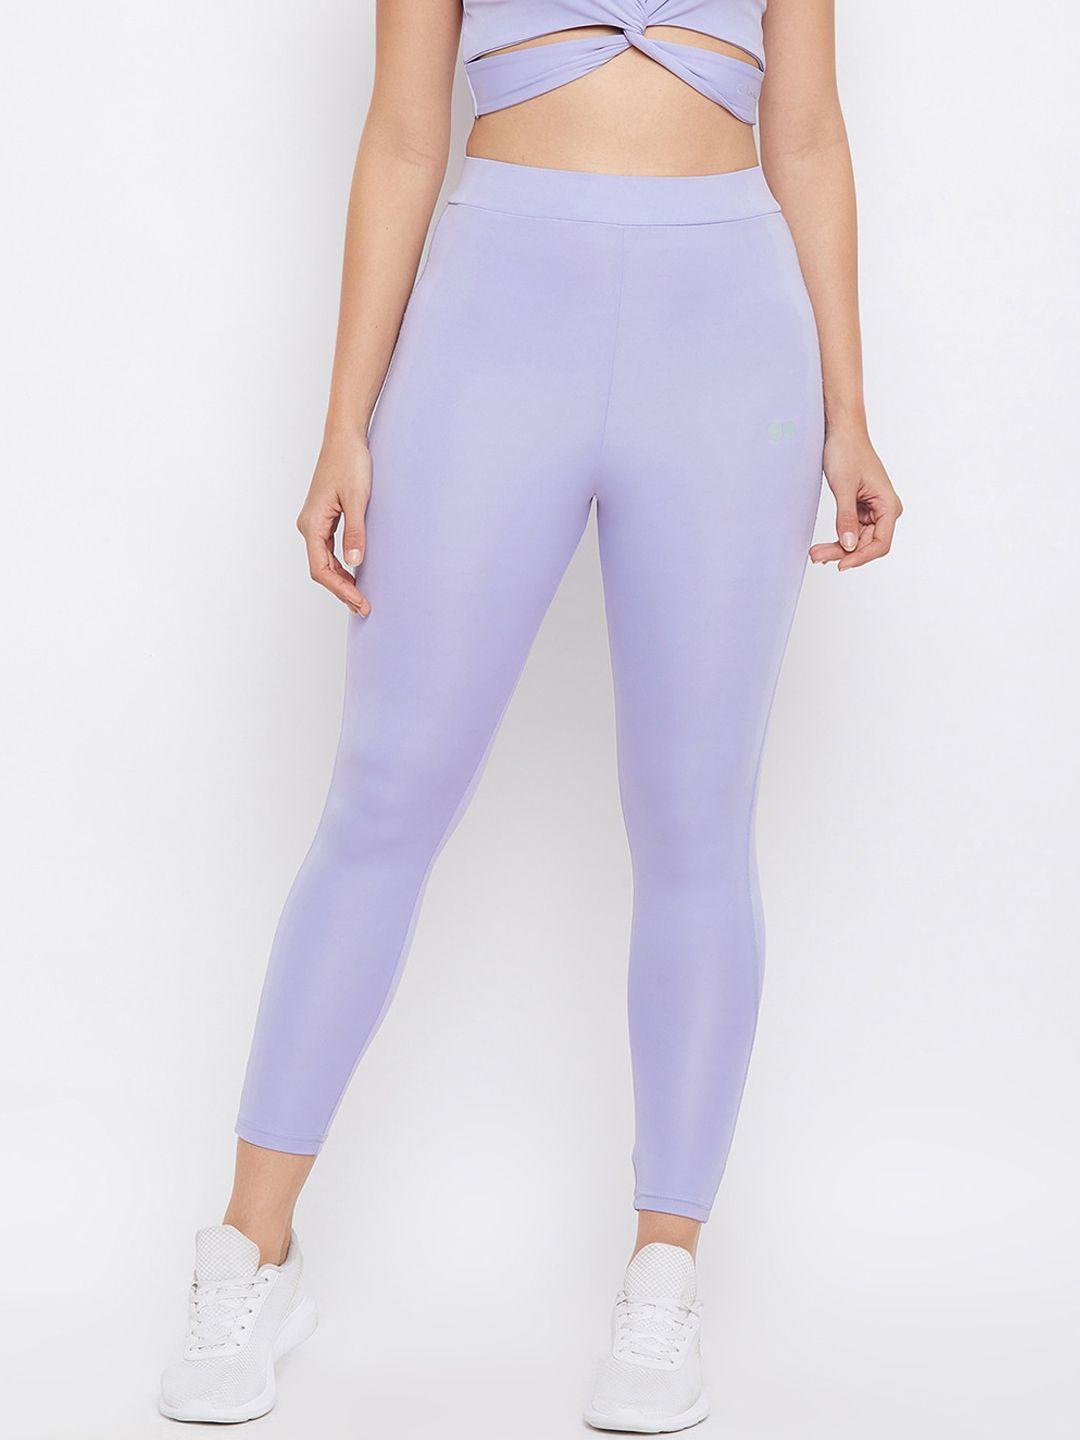 clovia-women-purple-solid-tights